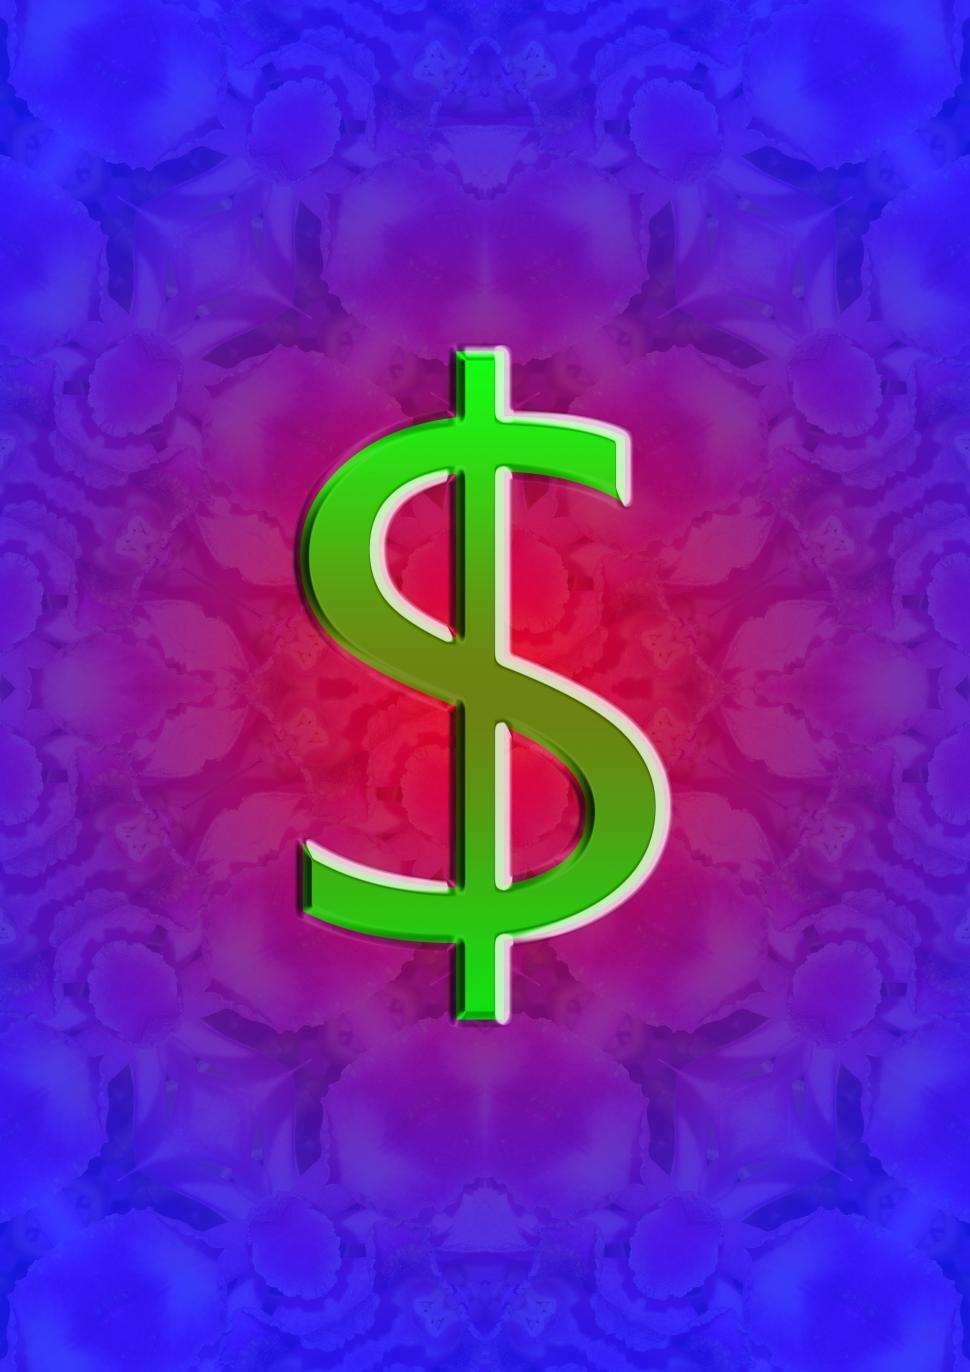 Free Image of Dollar sign  